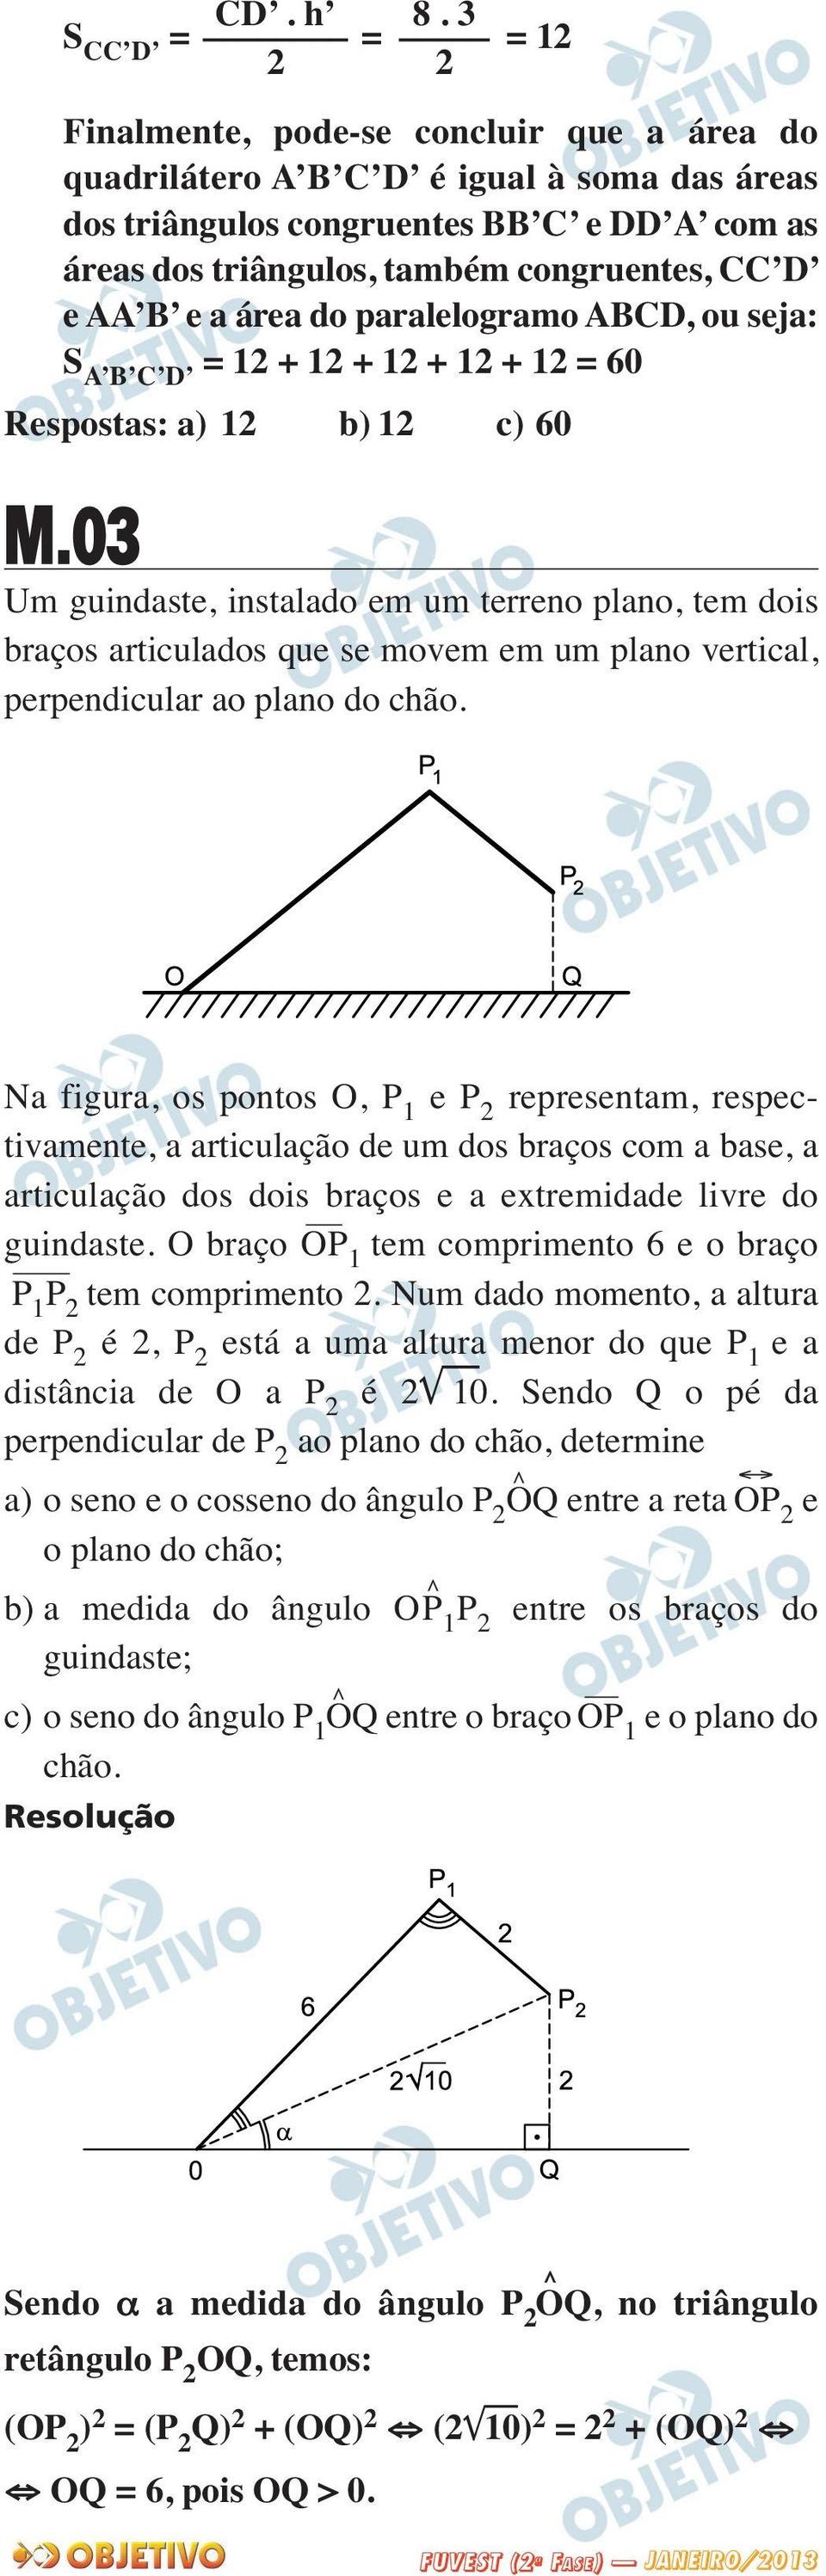 CC D e AA B e a área do paralelogramo ABCD, ou seja: S A B C D = 12 + 12 + 12 + 12 + 12 = 60 Respostas: a) 12 b) 12 c) 60 M.